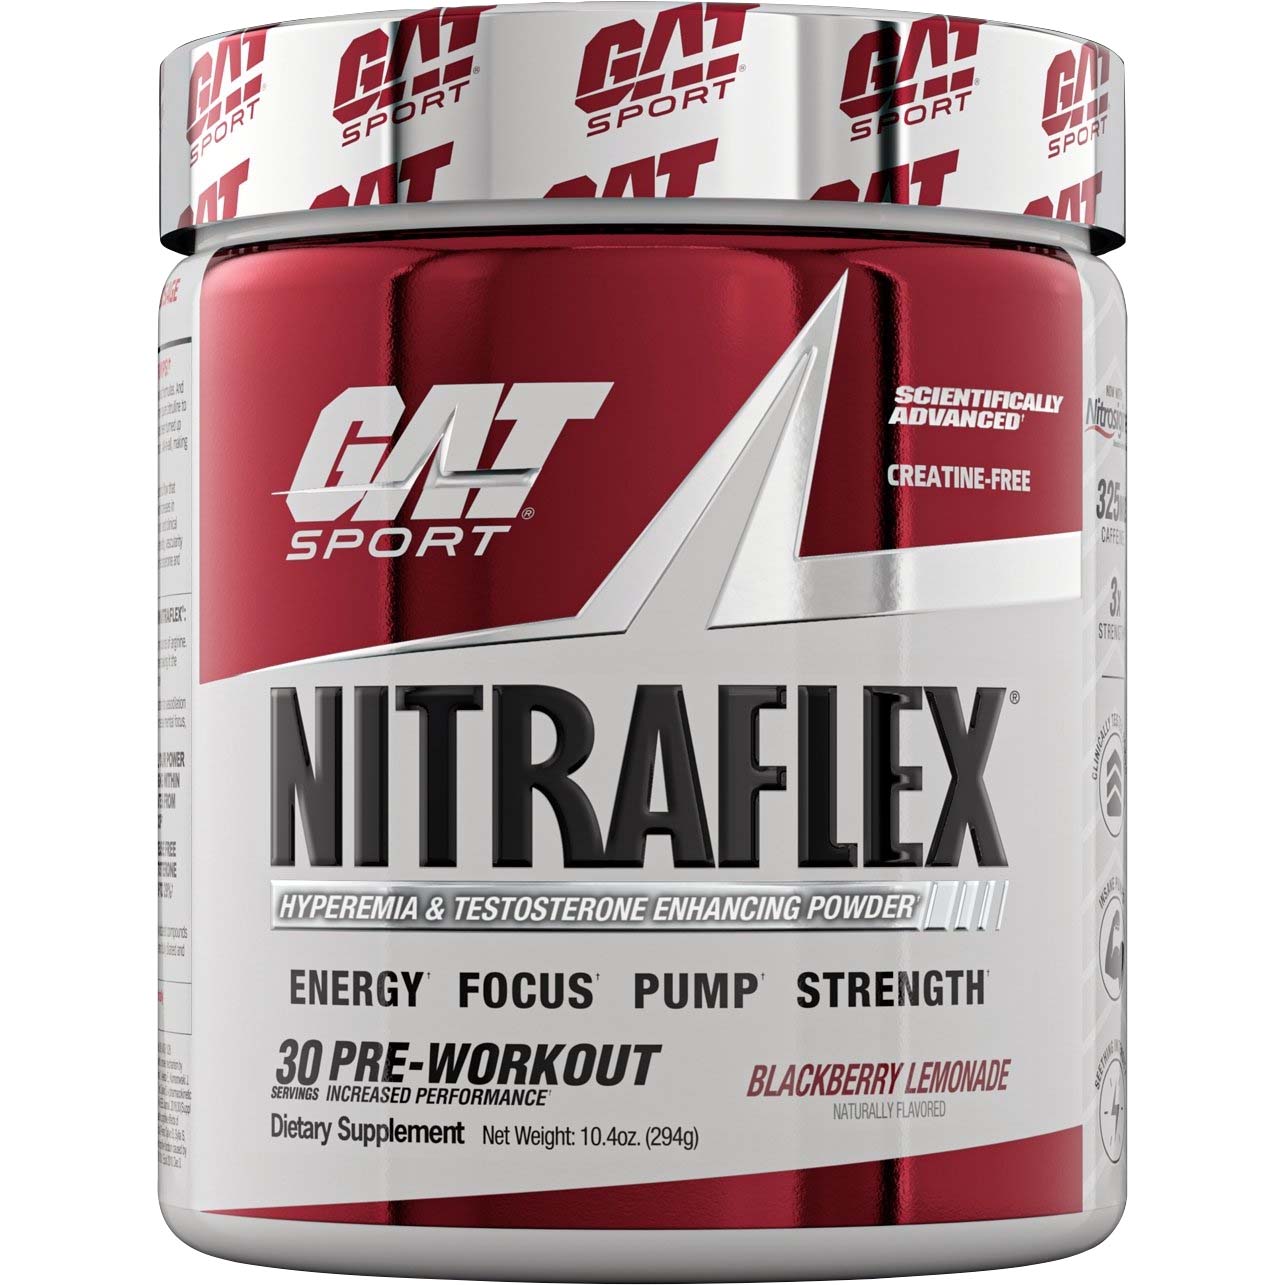 Gat Sport Nitraflex Testosterone Boosting Powder, Black Cherry, 30